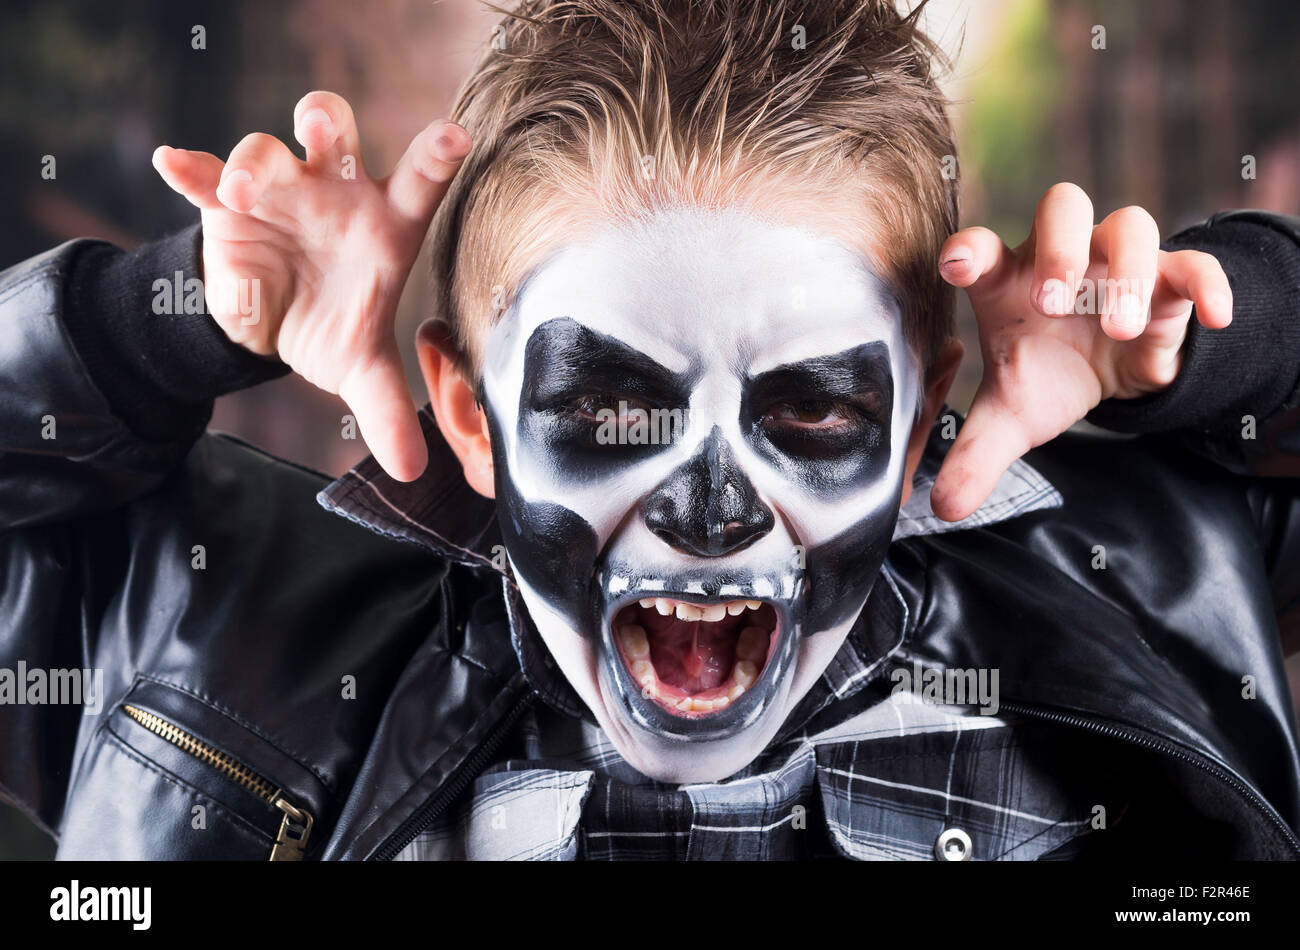 Scary little boy wearing skull makeup Stock Photo